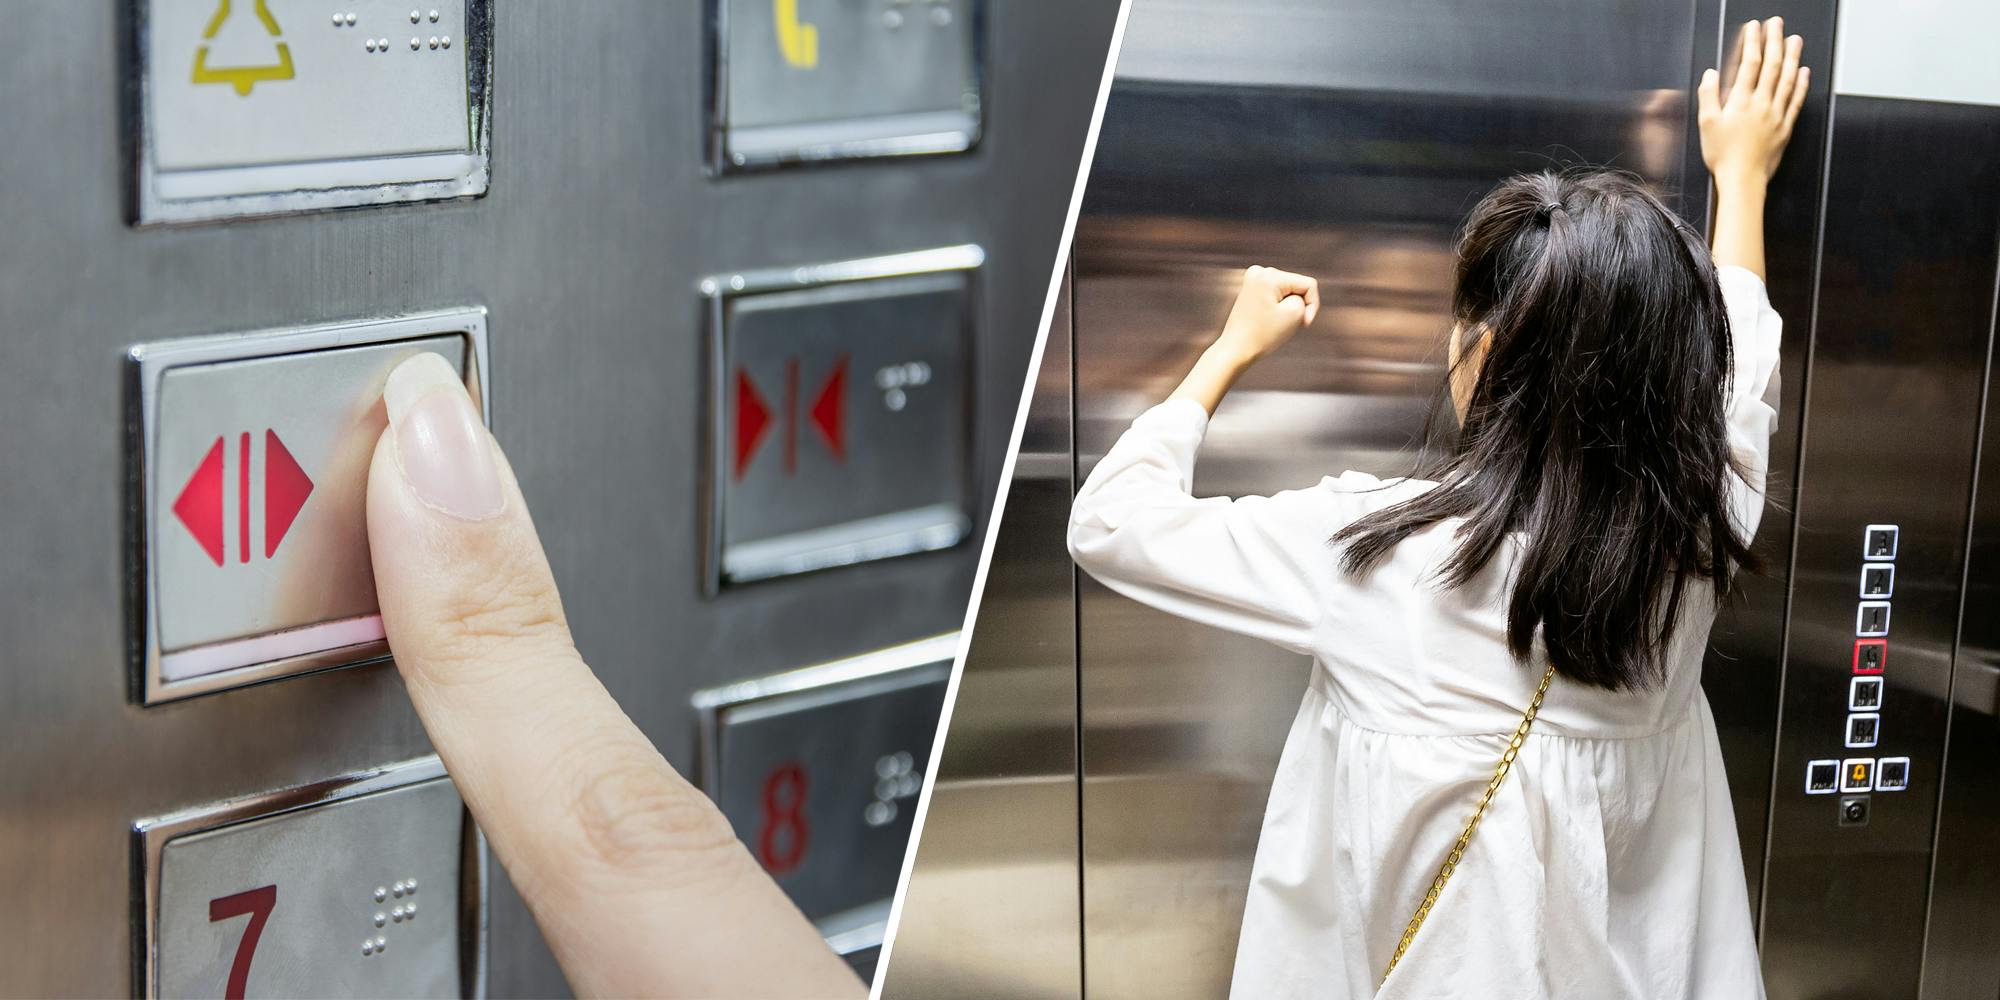 Finger pressing elevator button(l), Woman banging on elevator door(r)